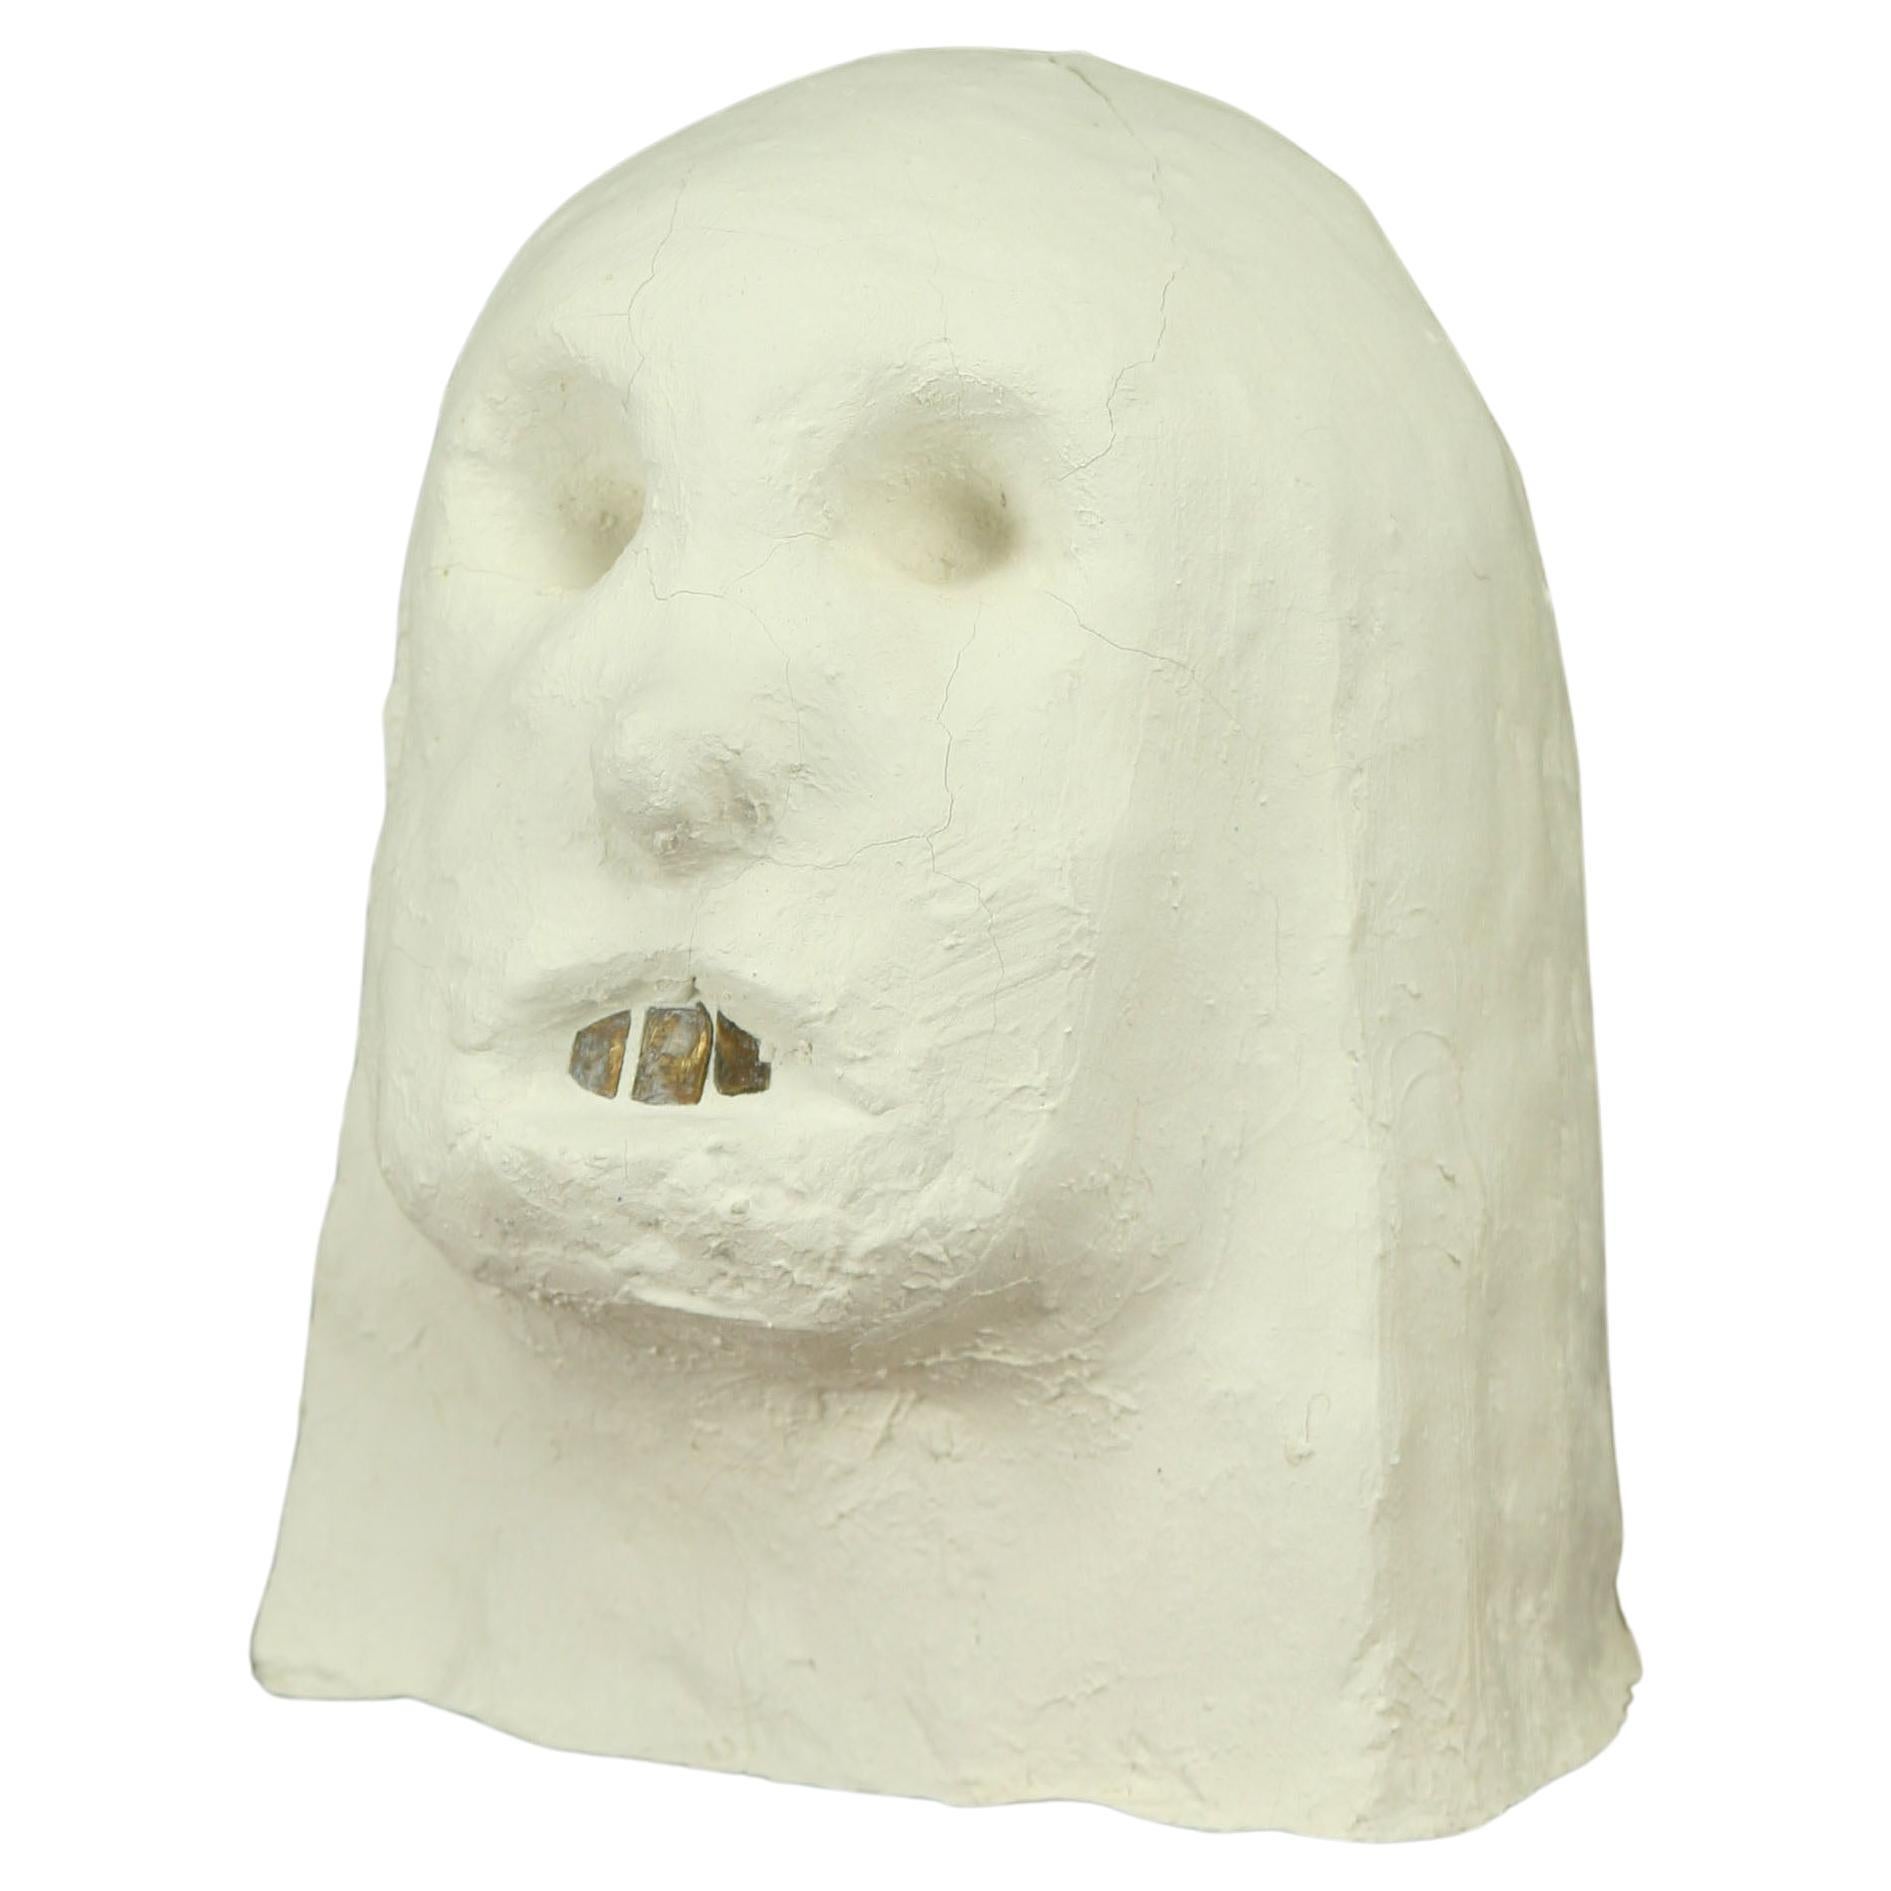 Dumb Head Sculpture of Cement For Sale